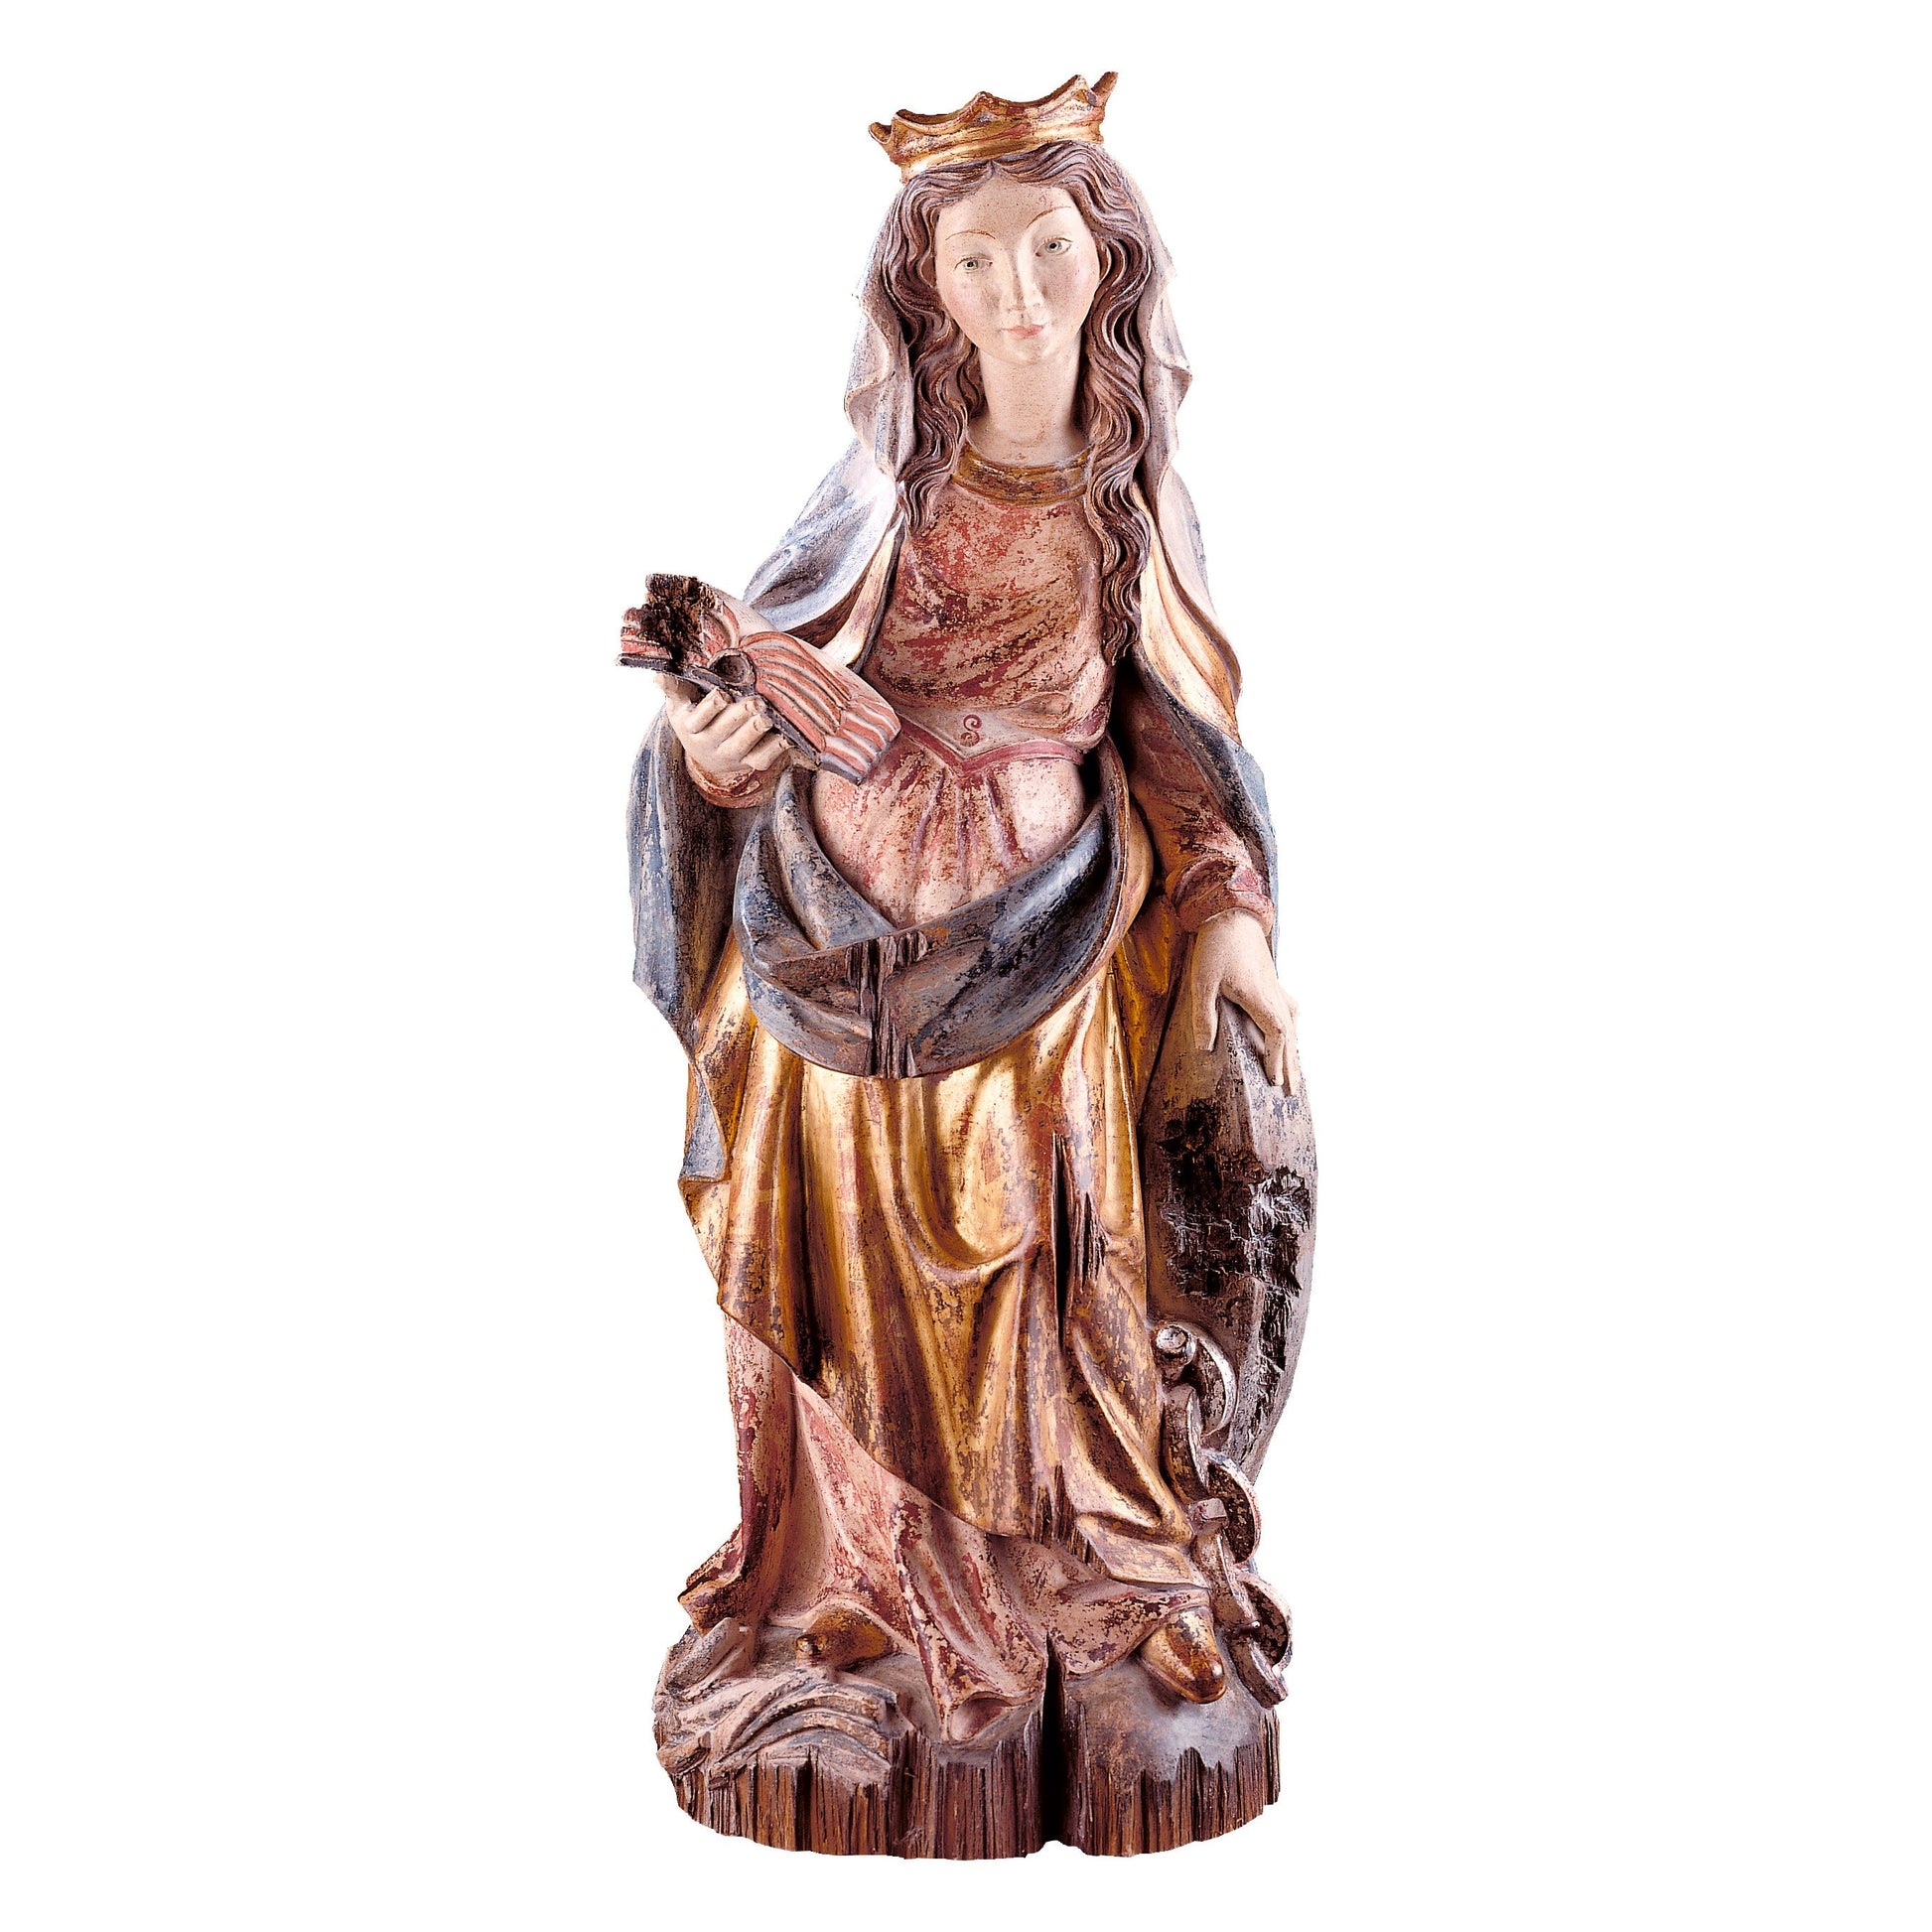 Mondo Cattolico Golden / 30 cm (11.8 in) Wooden statue of St. Christine